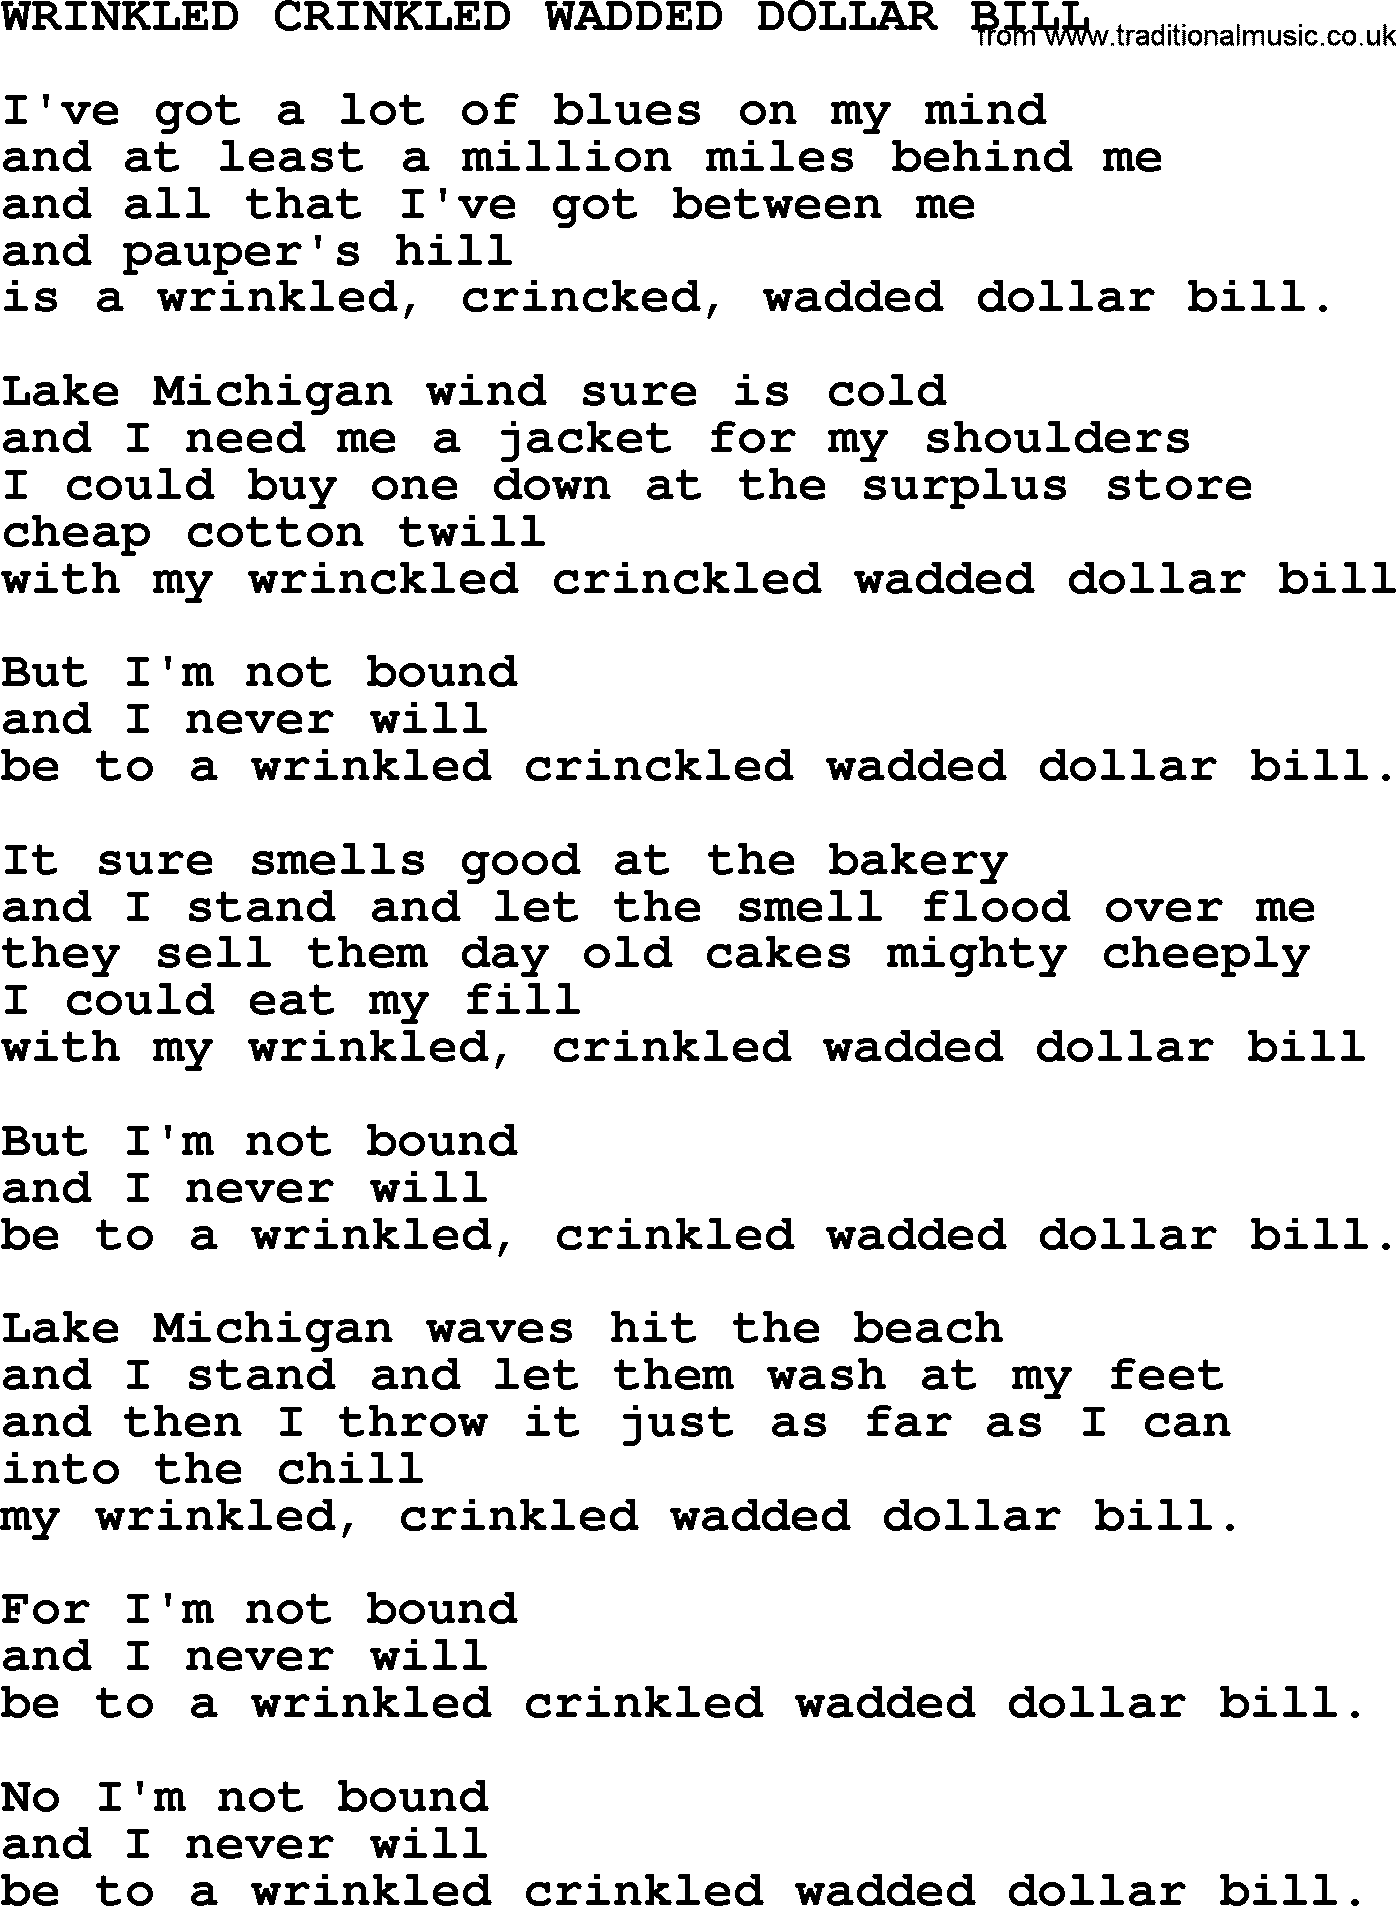 Johnny Cash song Wrinkled Crinkled Wadded Dollar Bill.txt lyrics